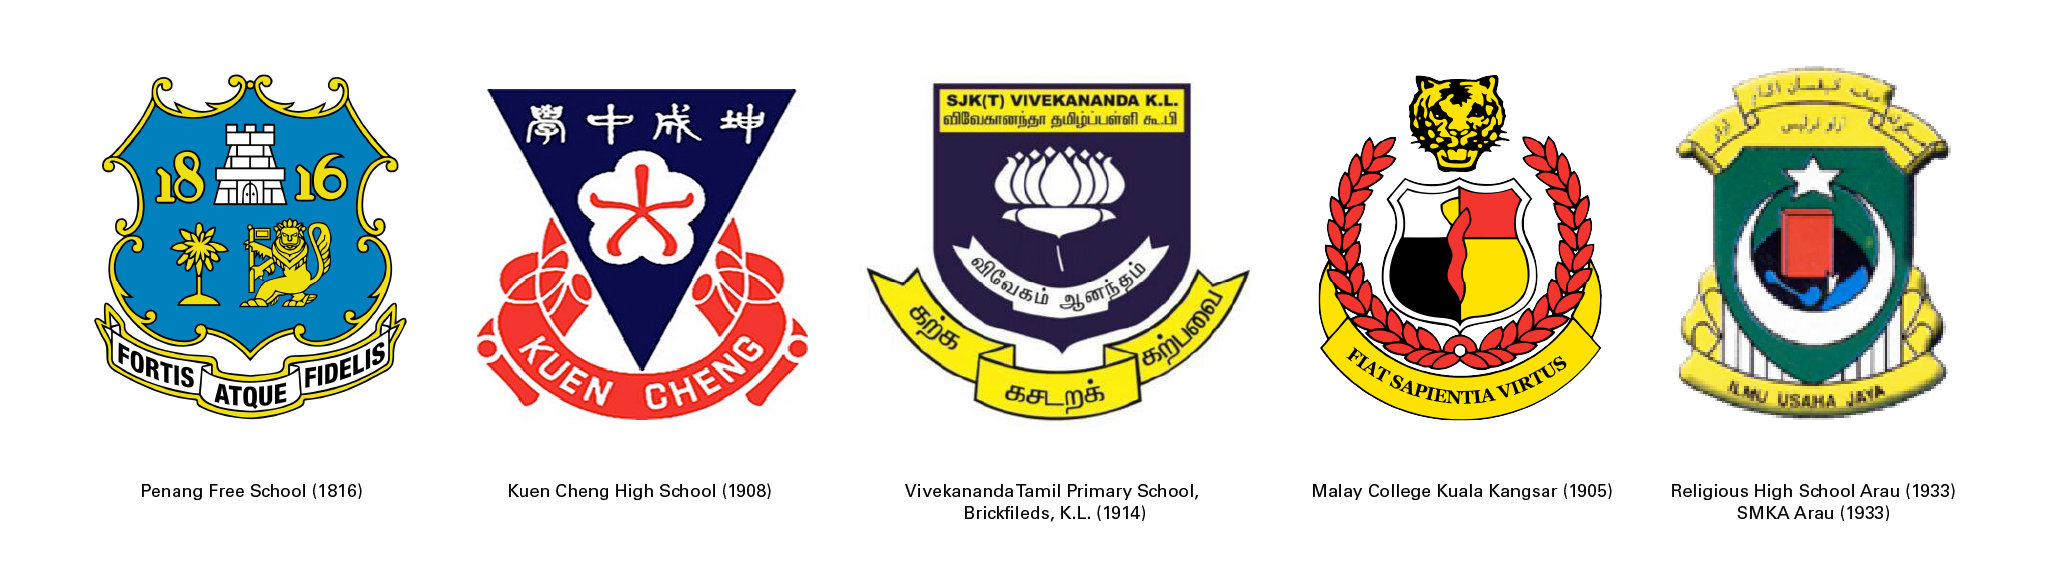 Public School emblems or badges in Malaysia